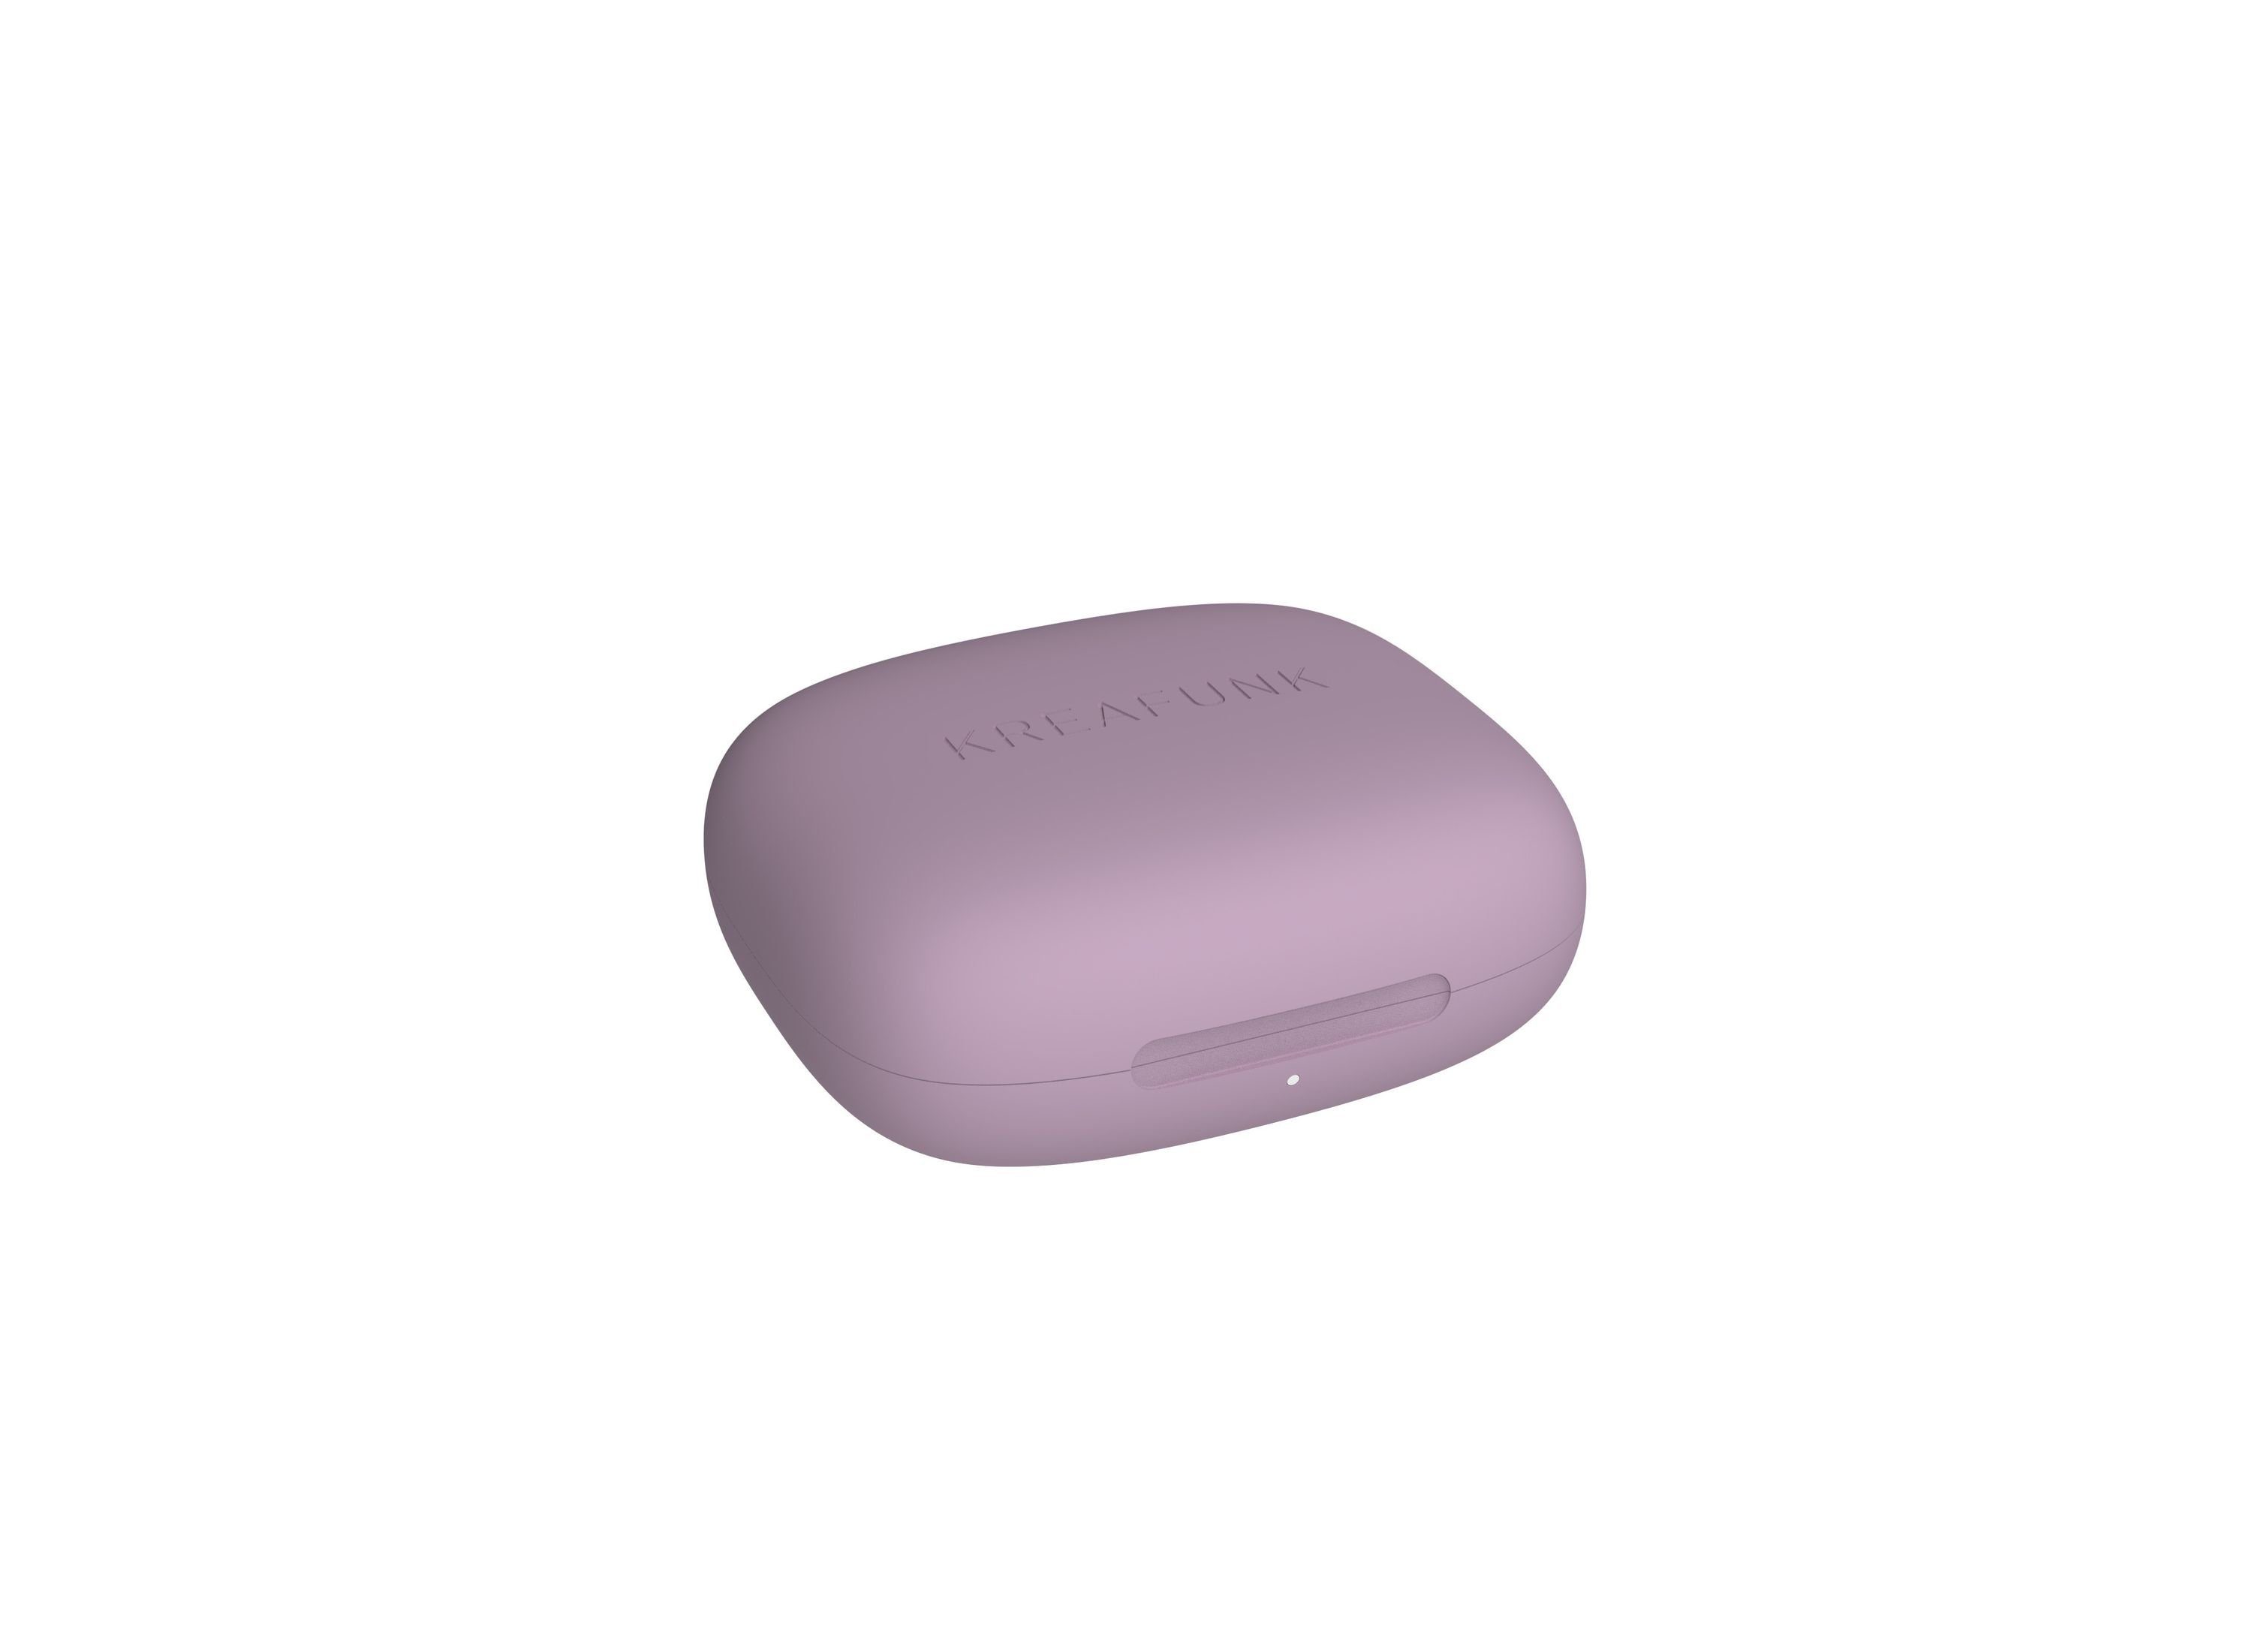 Kopfhörer) calm (KREAFUNK Bluetooth purple KREAFUNK aSENSE On-Ear-Kopfhörer